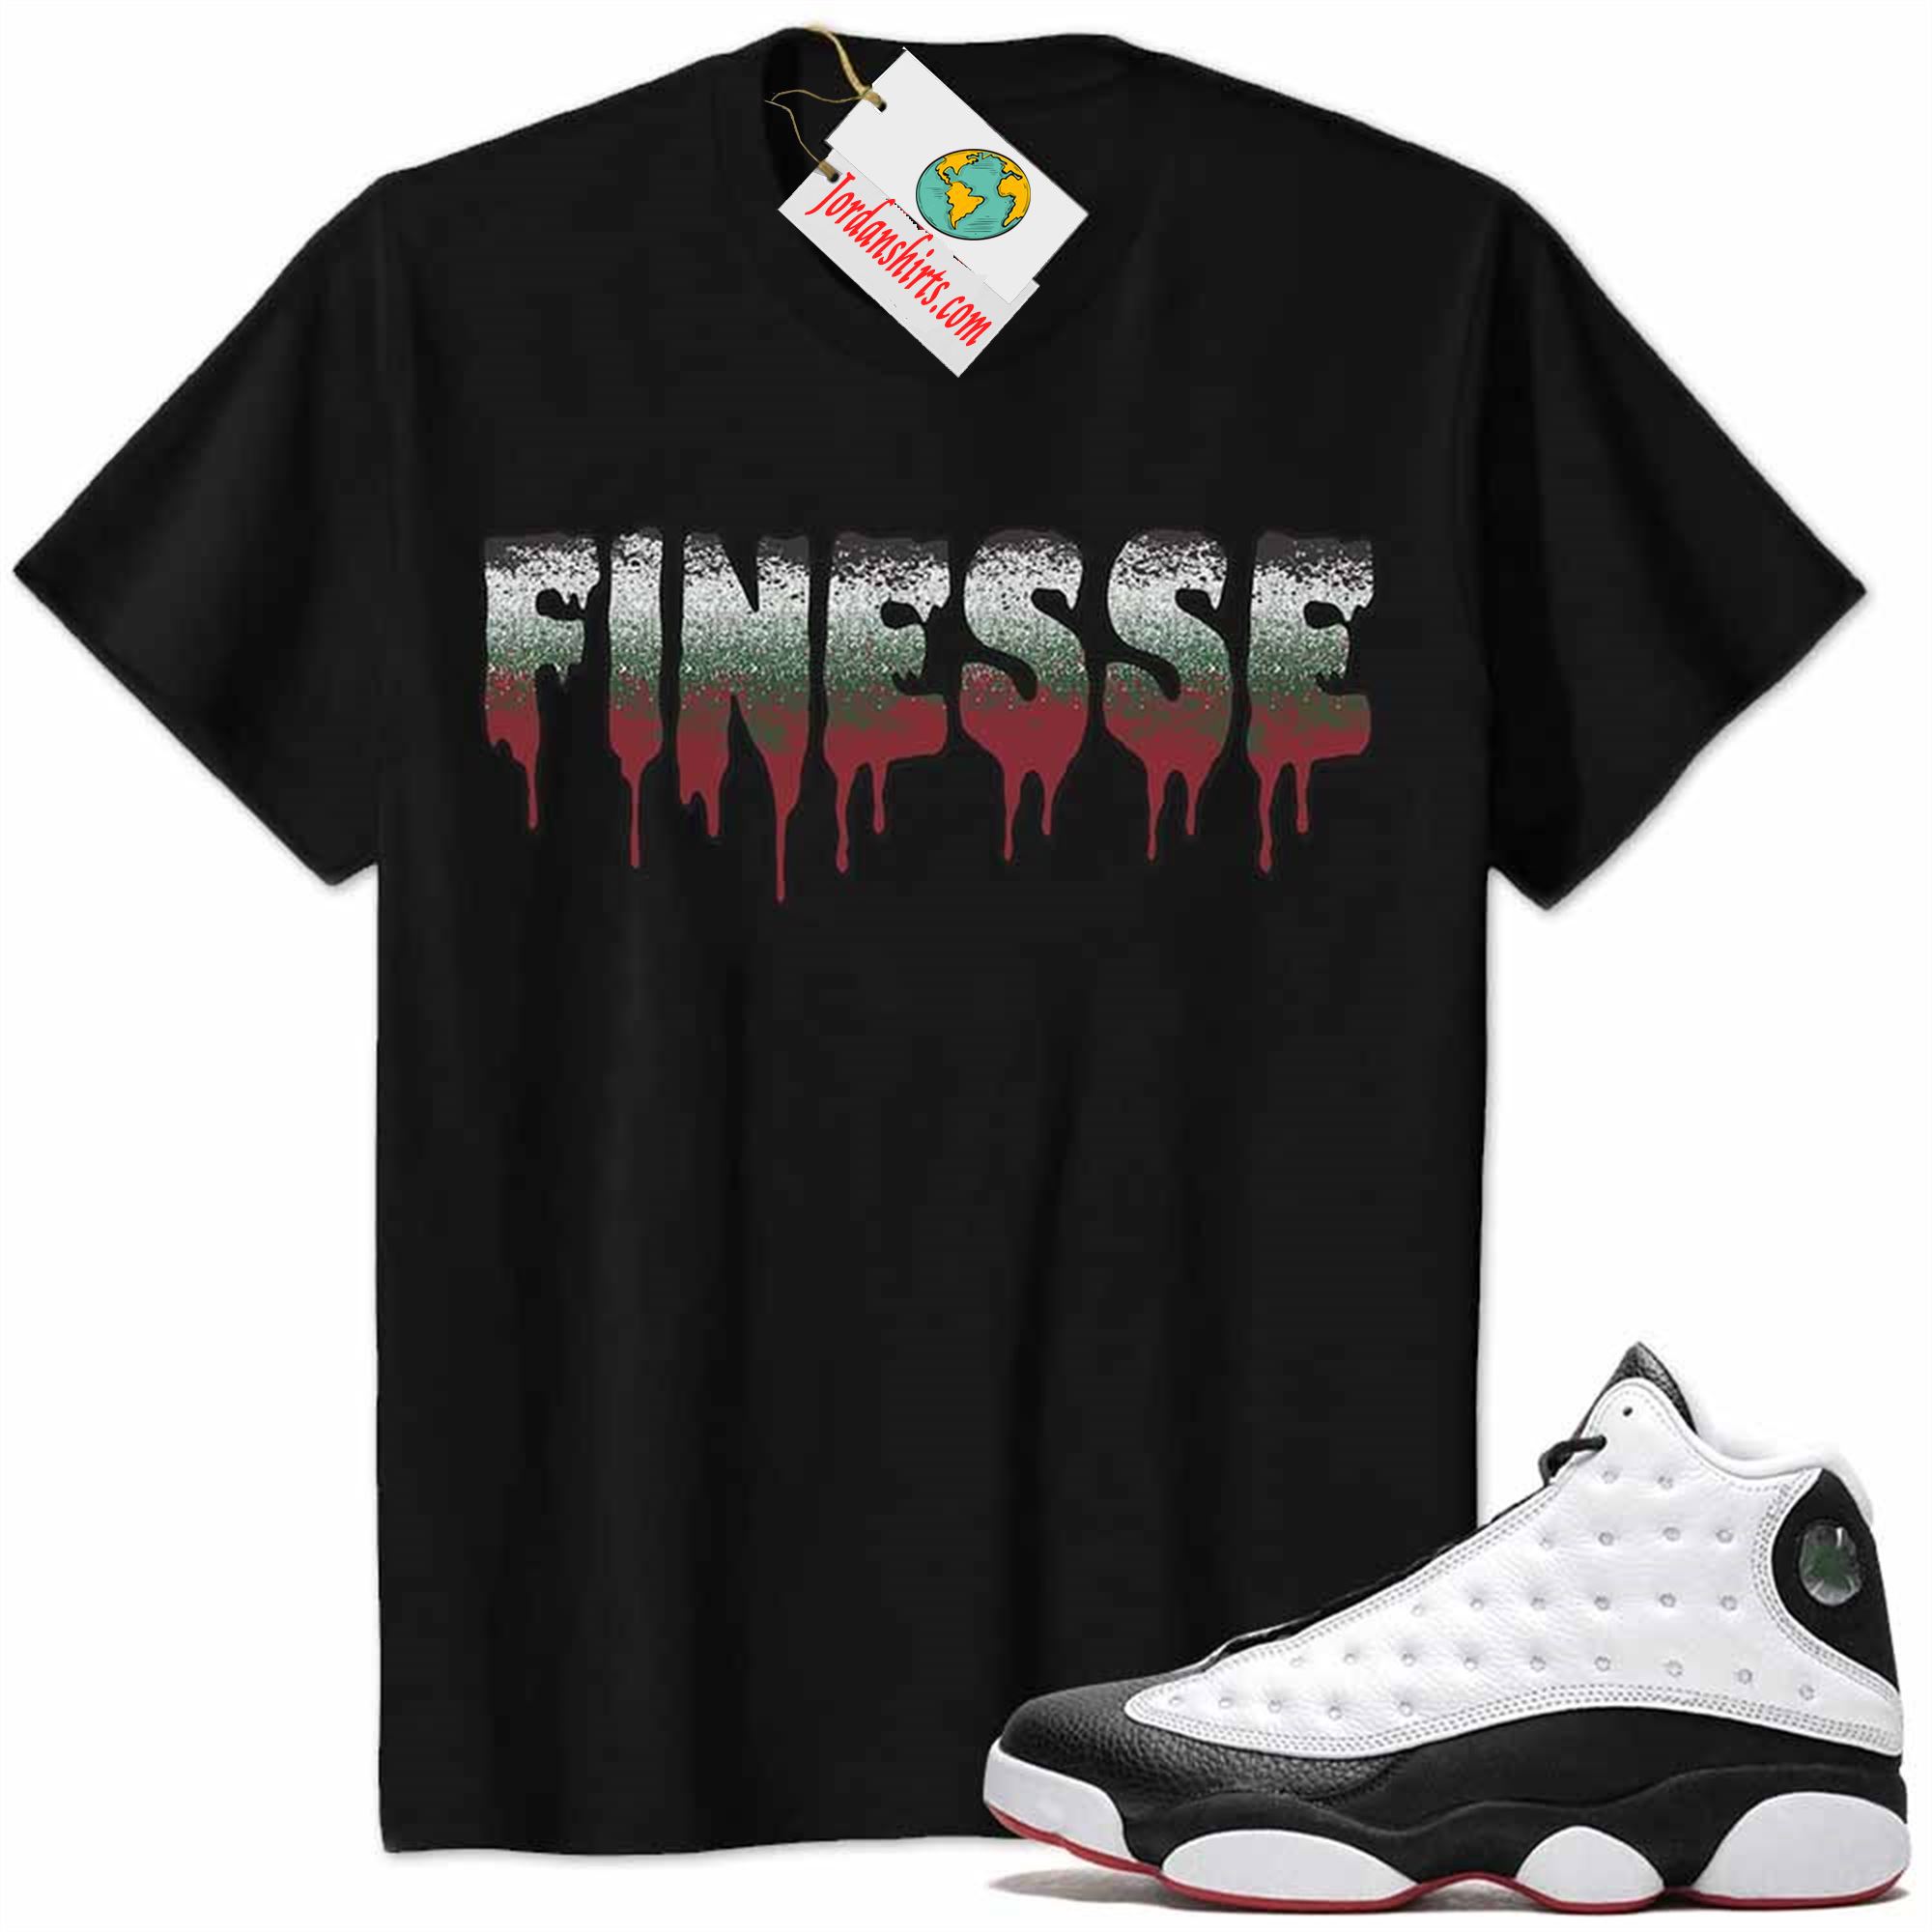 Jordan 13 Shirt, Jordan 13 He Got Game Shirt Finesse Drip Black Full Size Up To 5xl